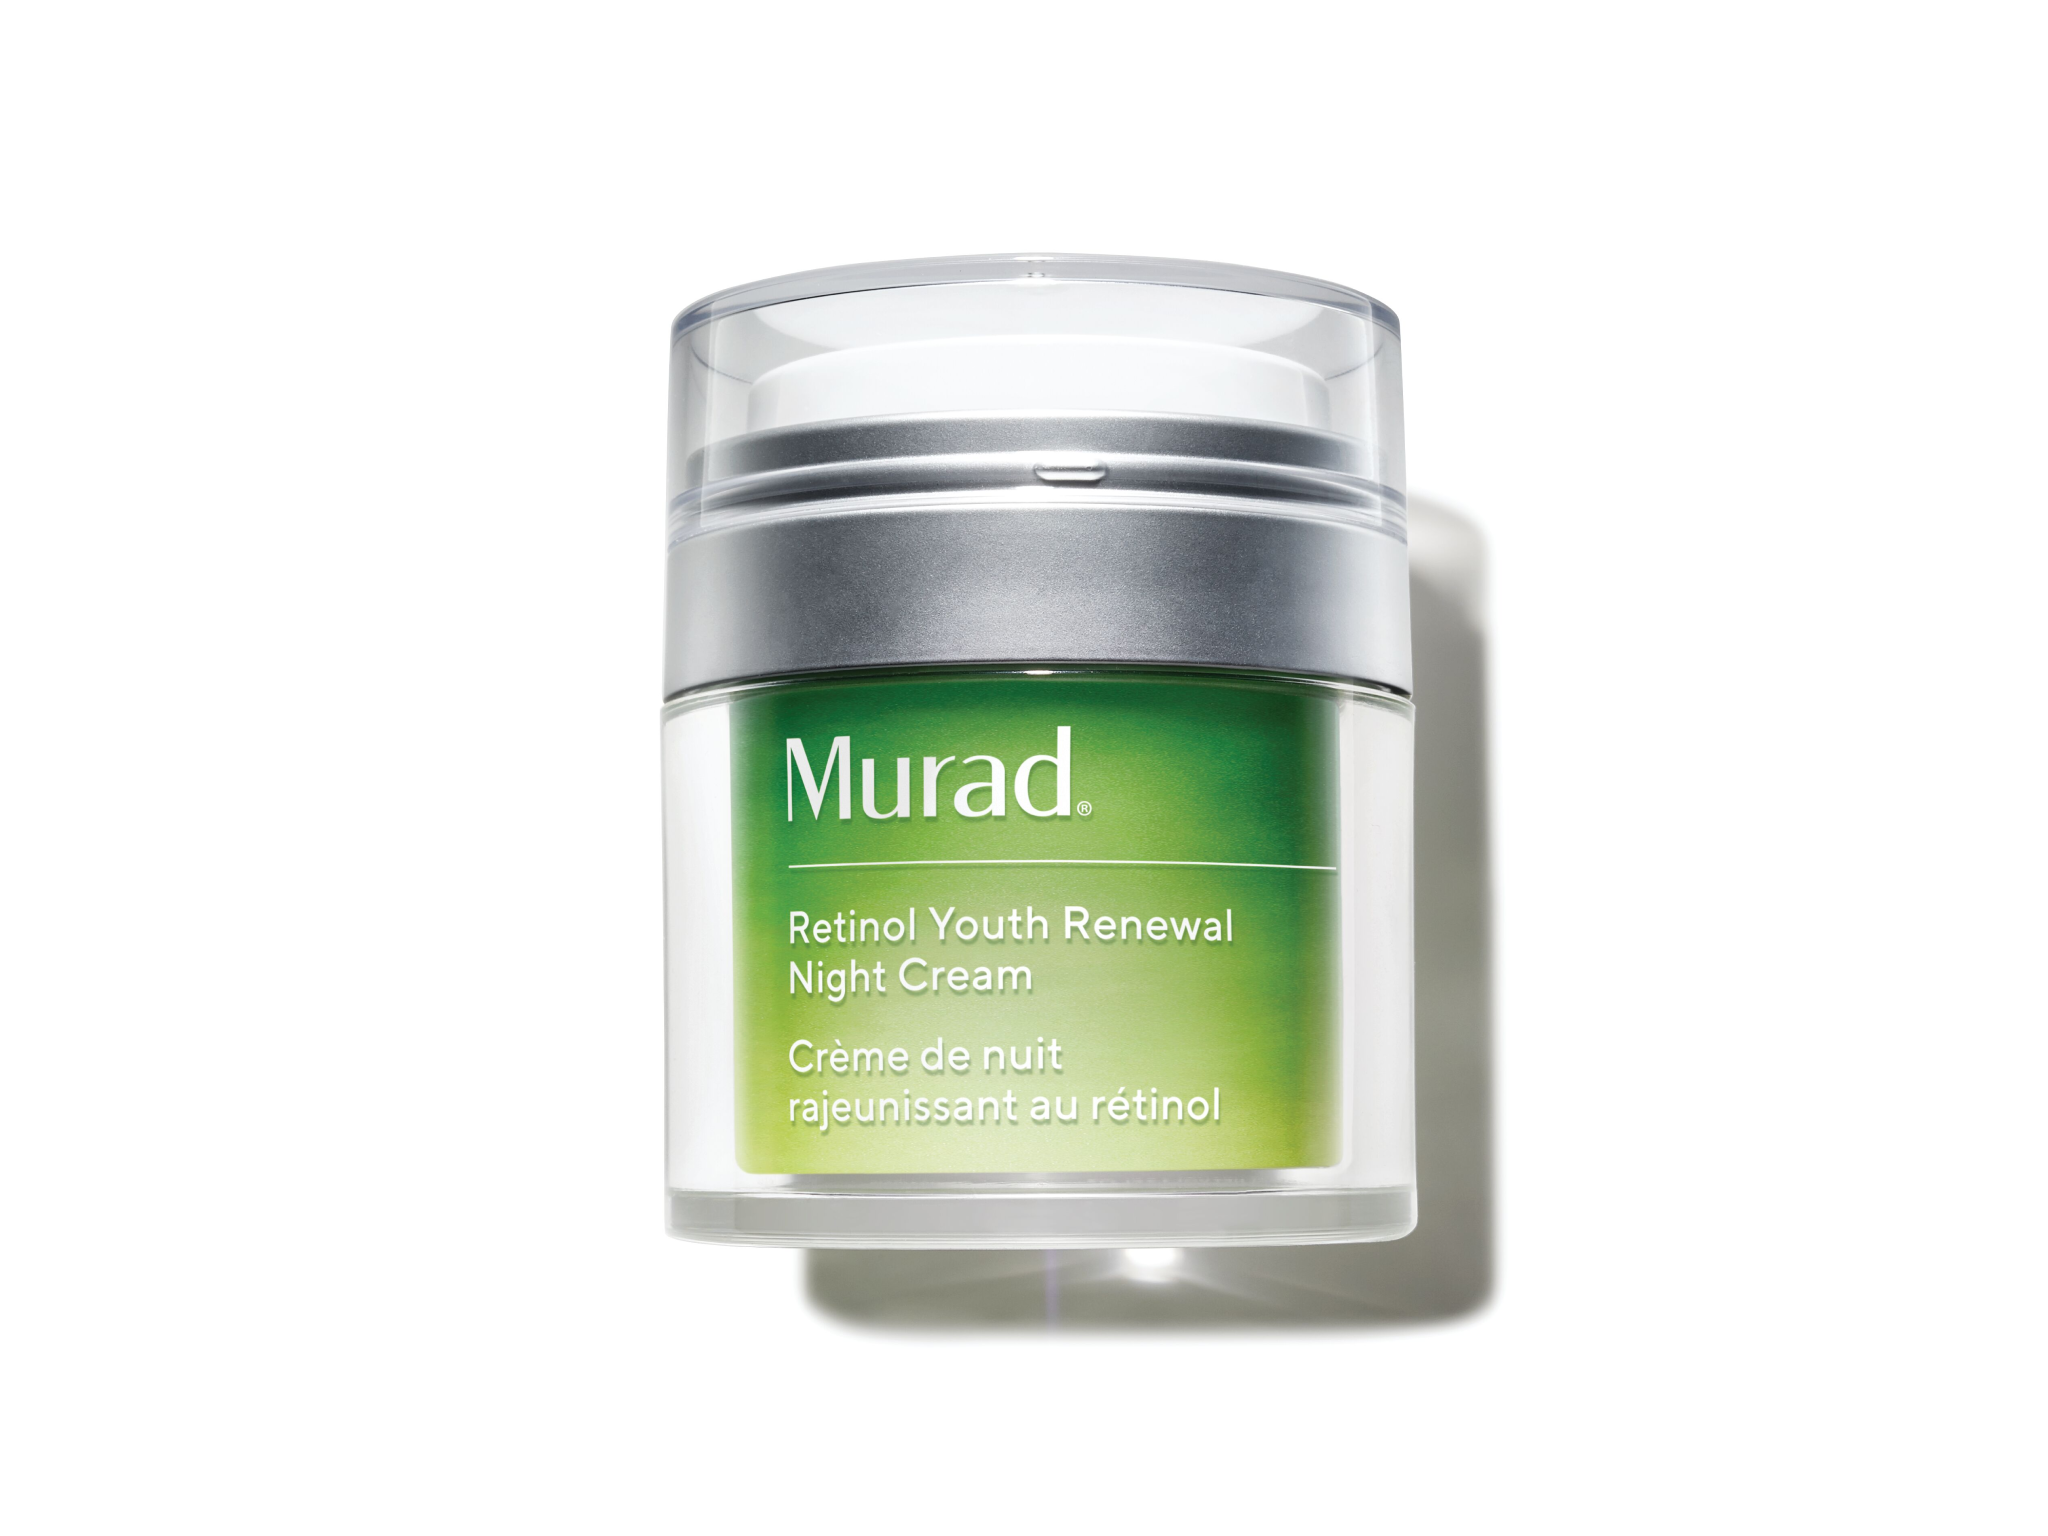 Murad Retinol Youth Renewal Night Cream.png